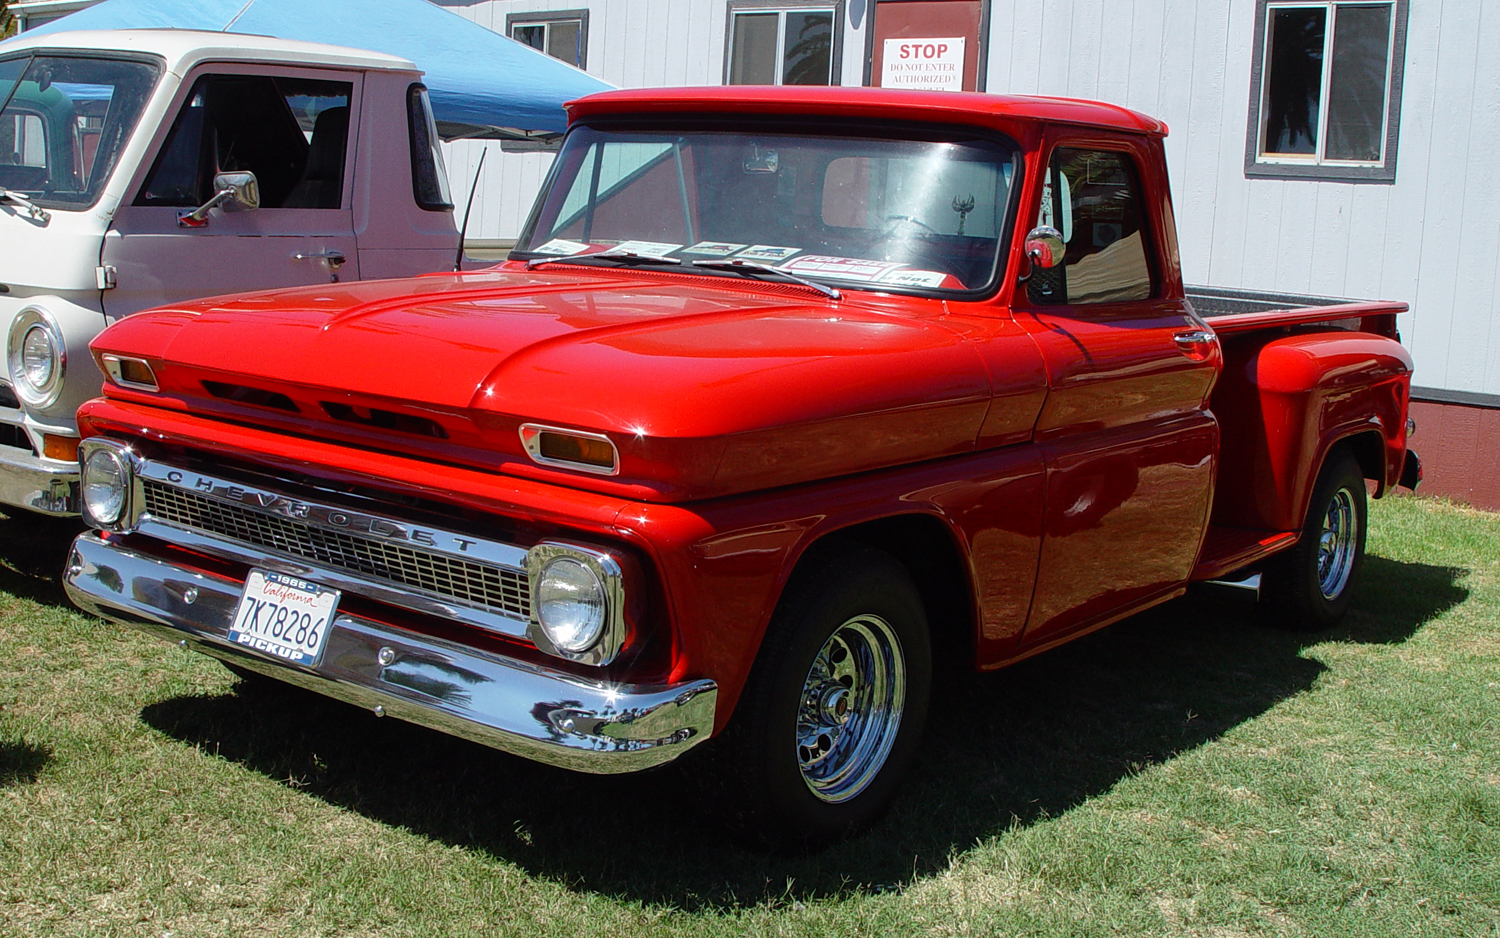 1965 Pickup #7